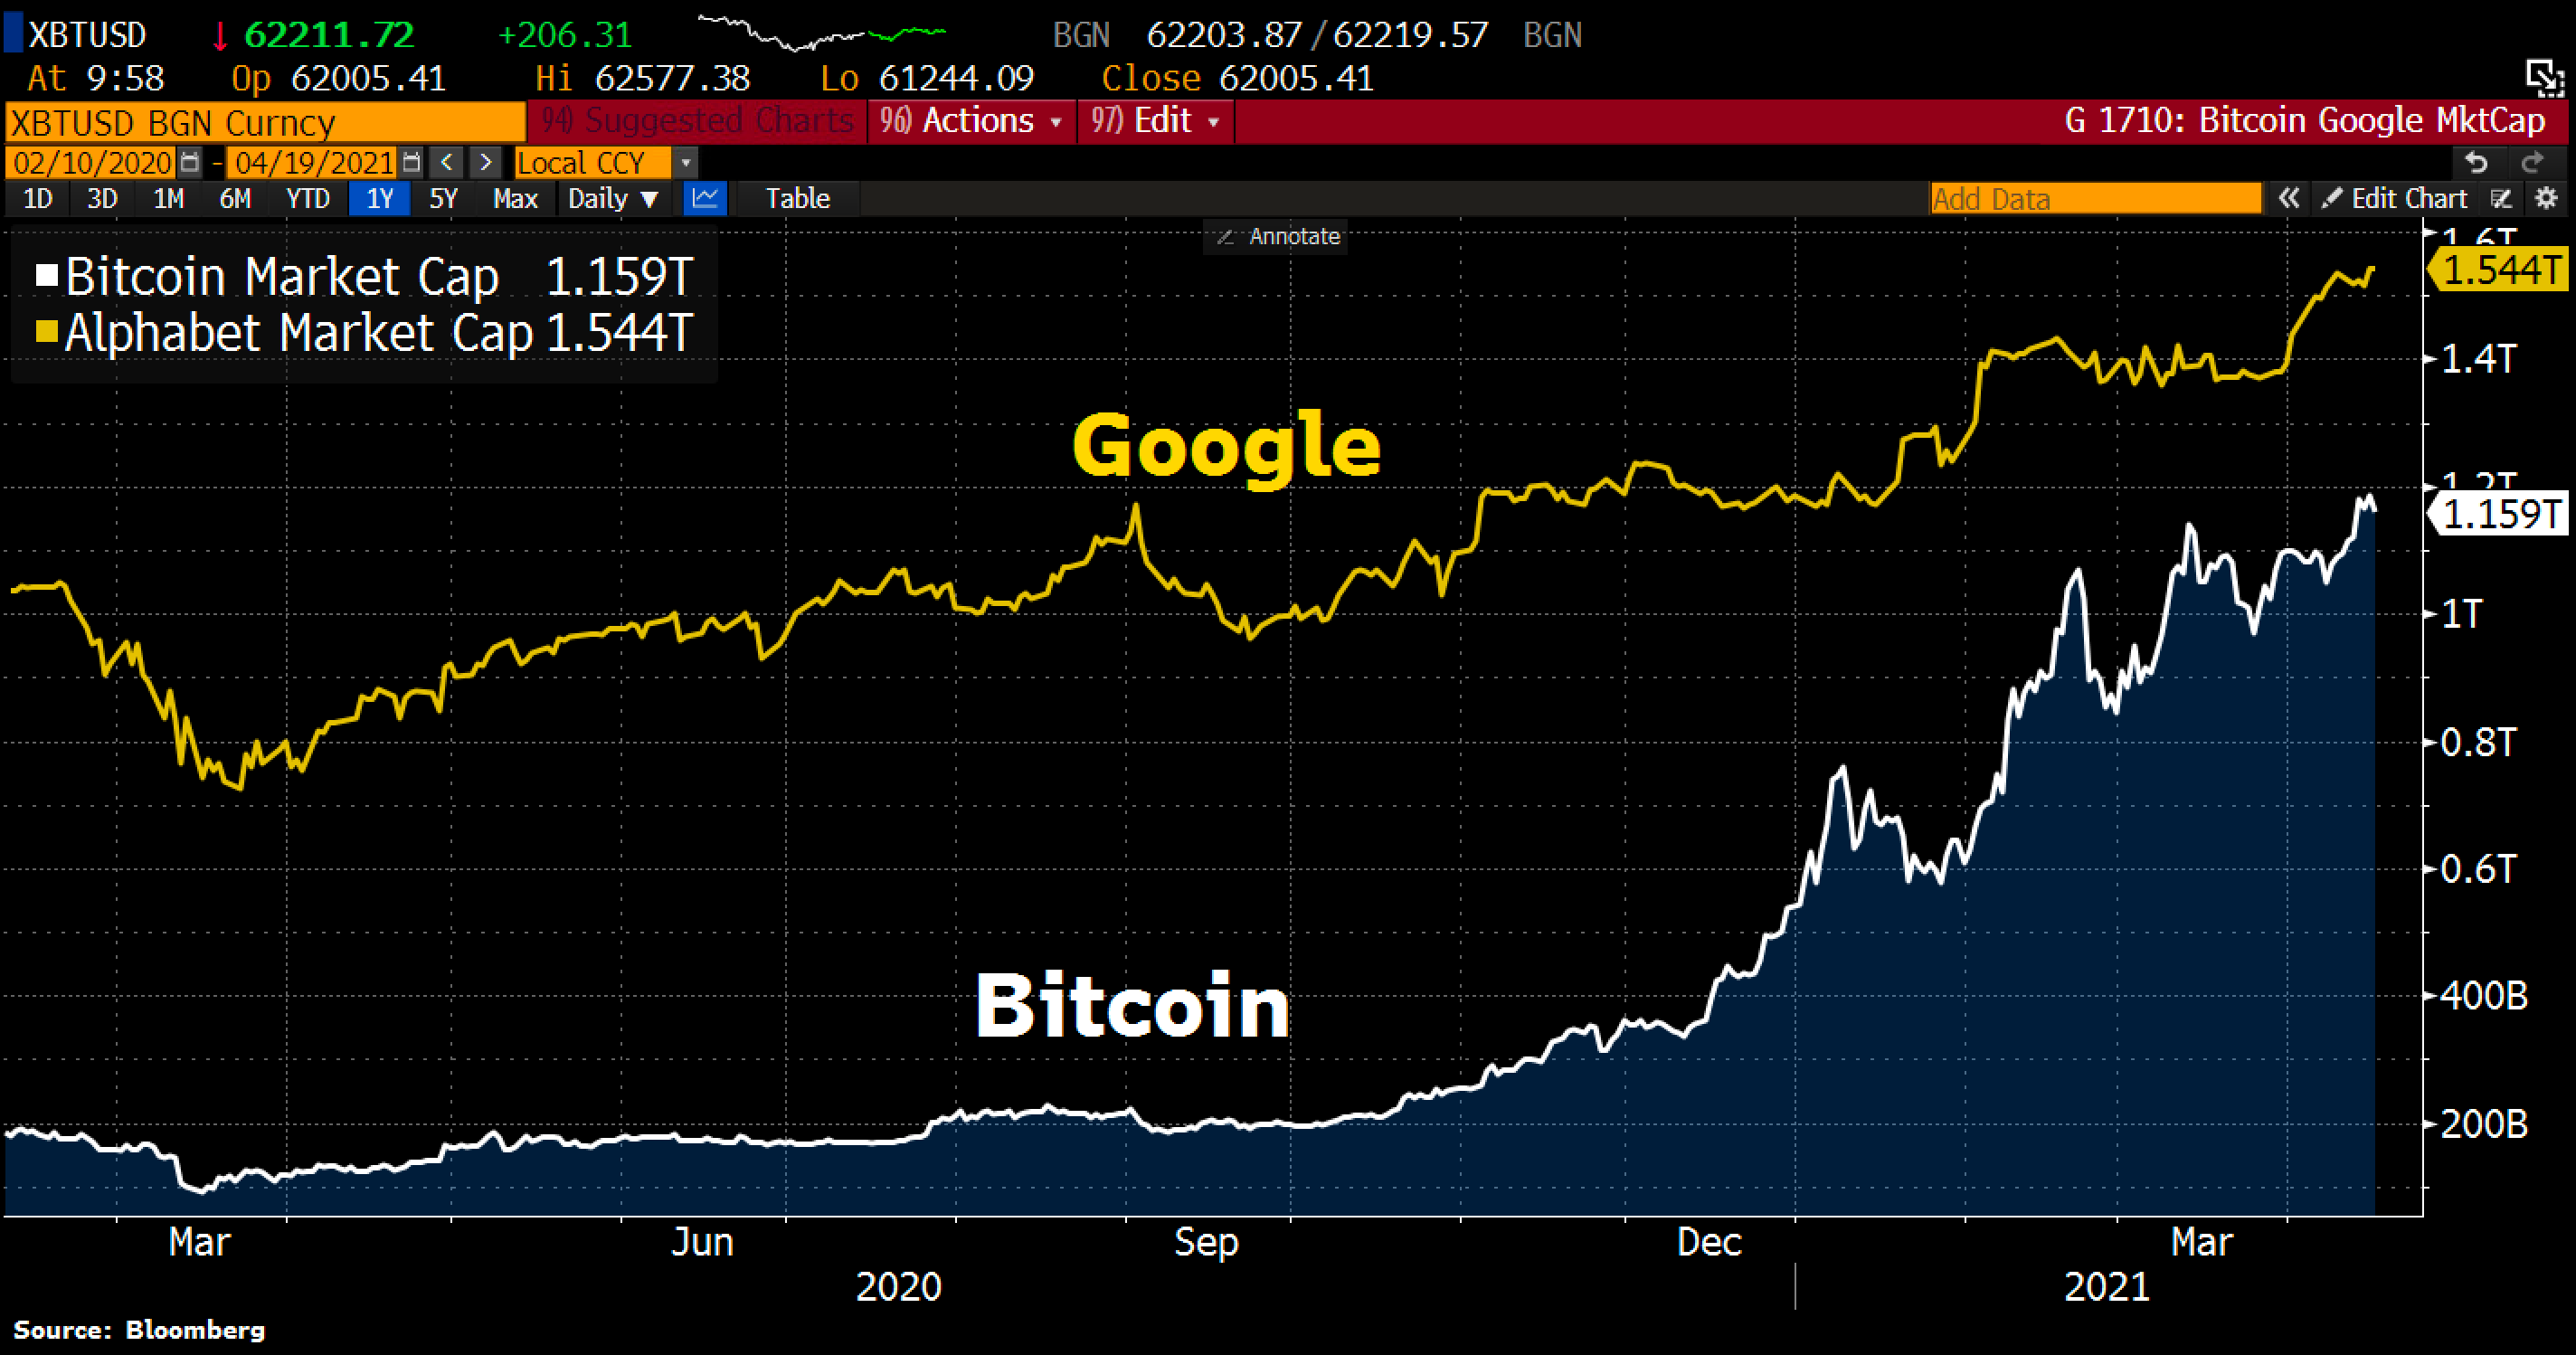 Bitcoin market value vs. Google market cap